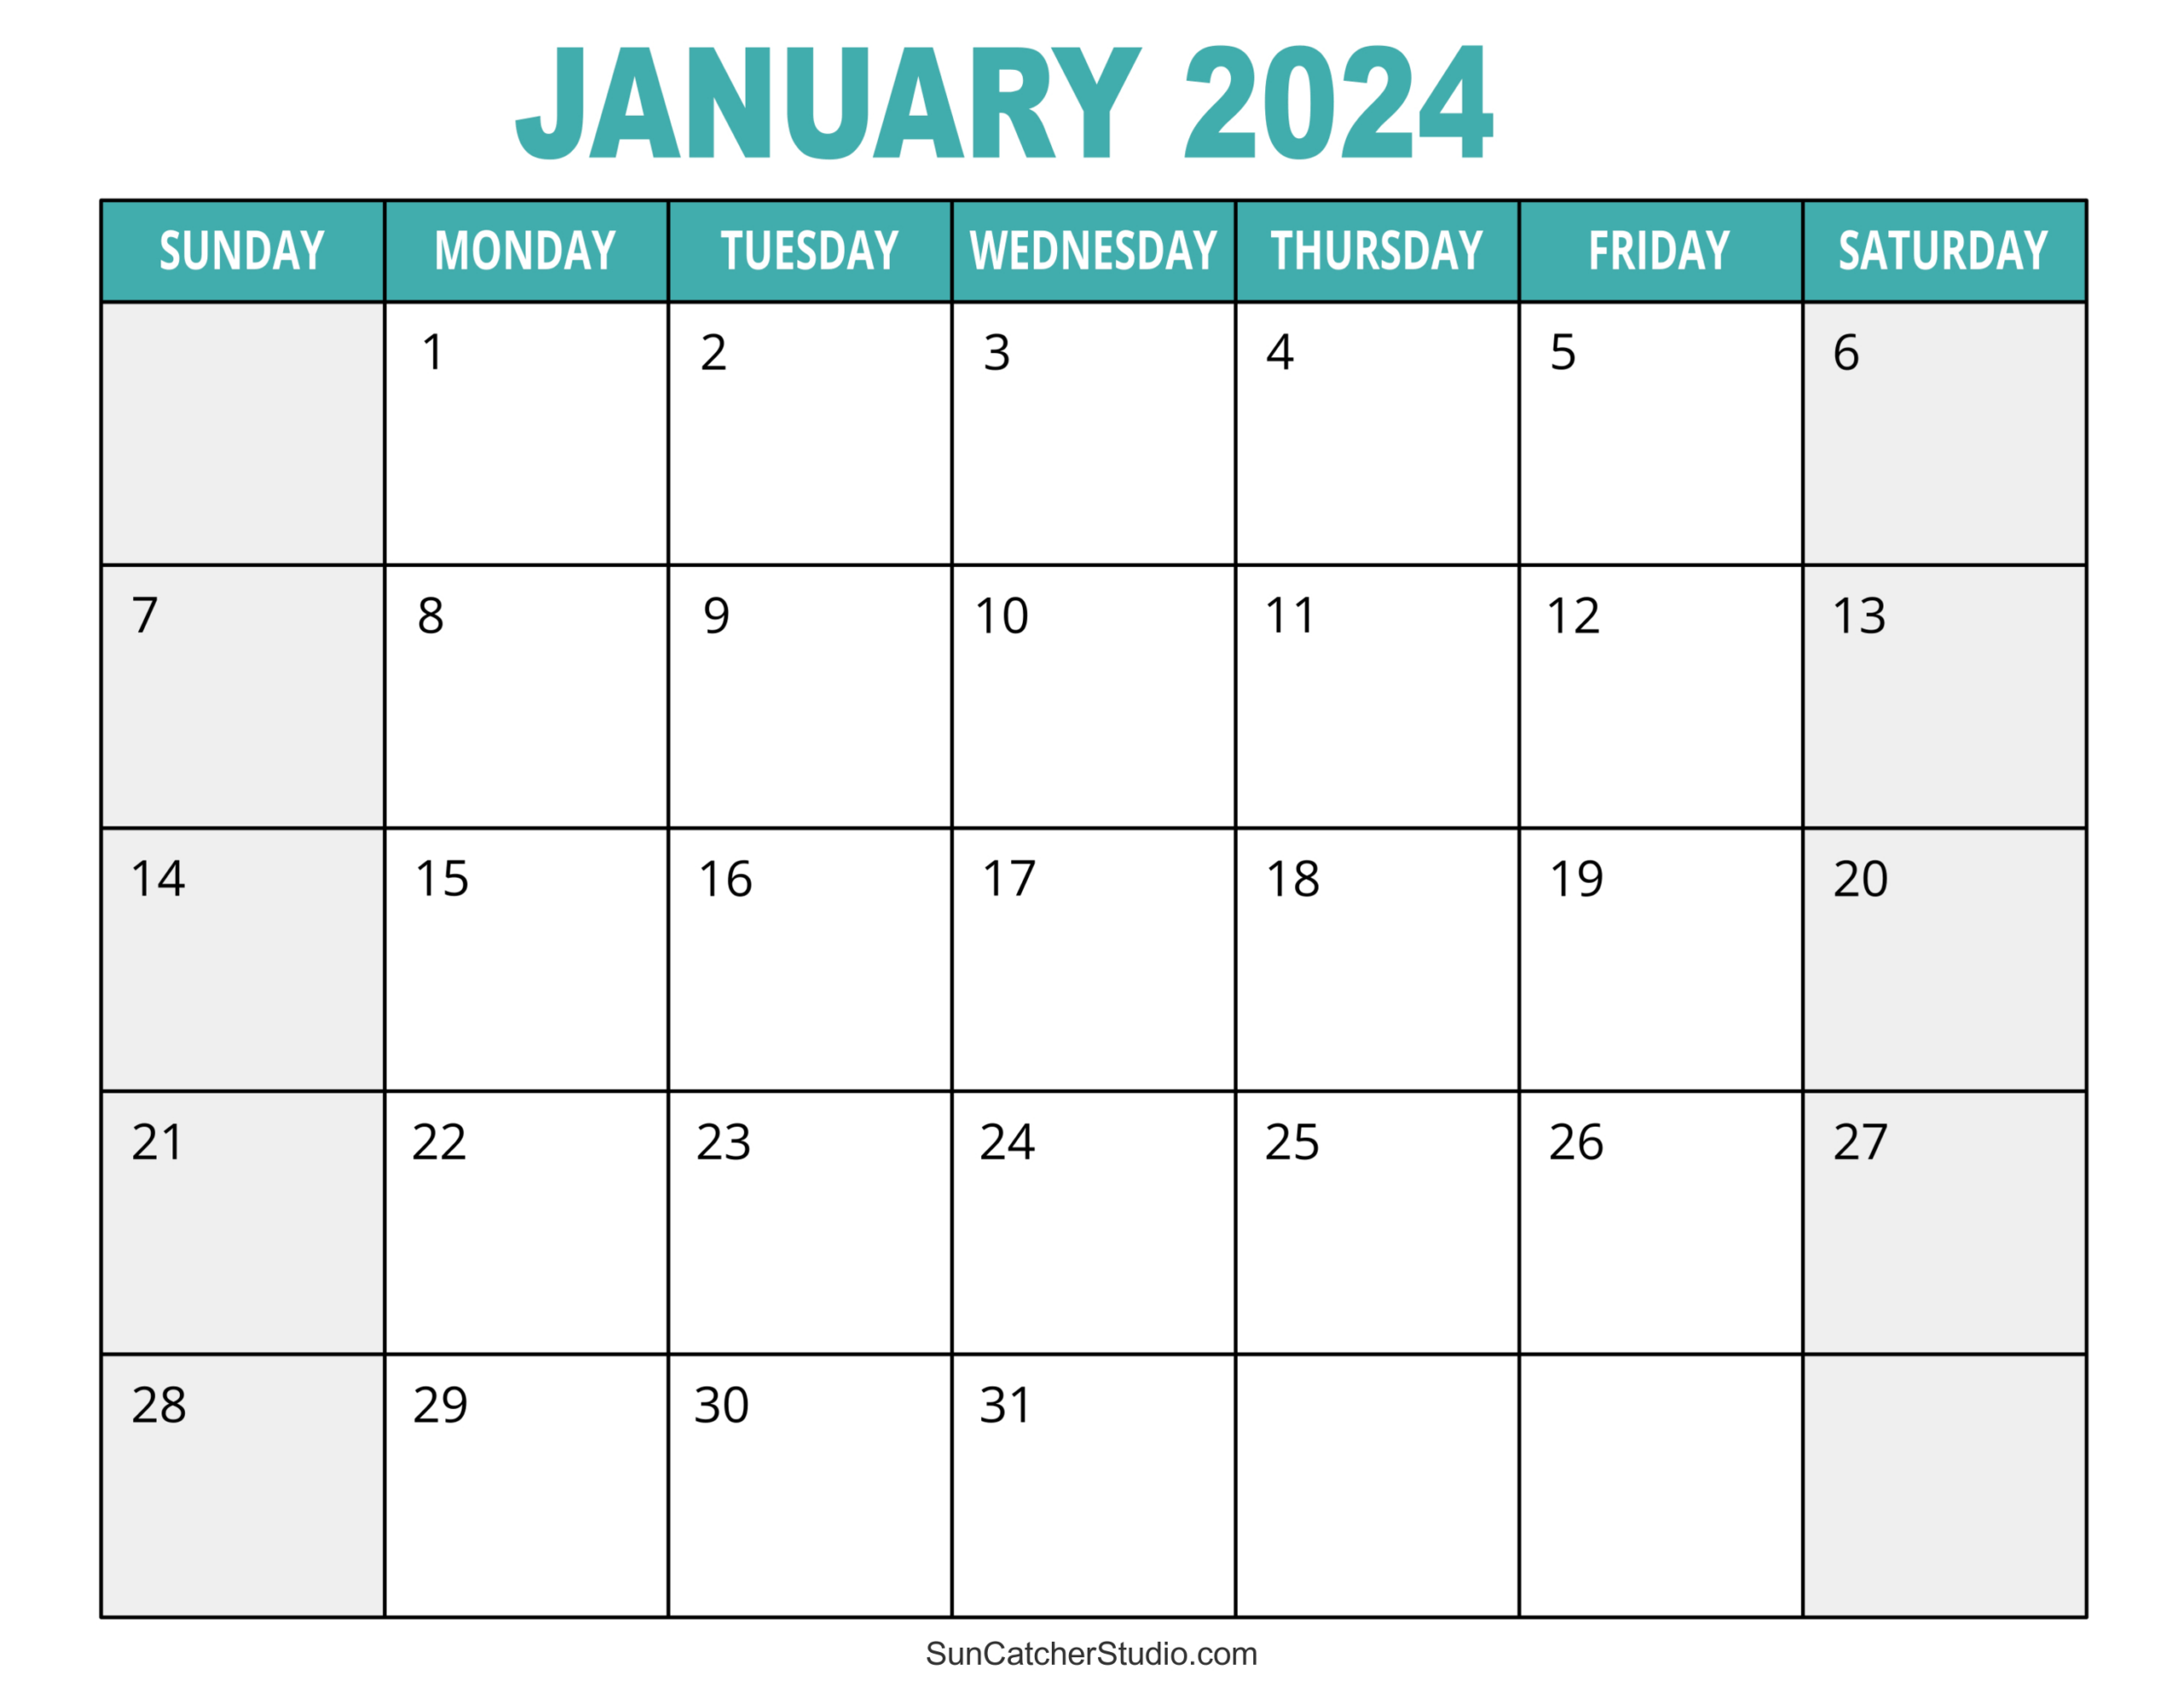 January 2024 Calendar (Free Printable) – Diy Projects, Patterns | January 2024 Calendar Printable Free Editable